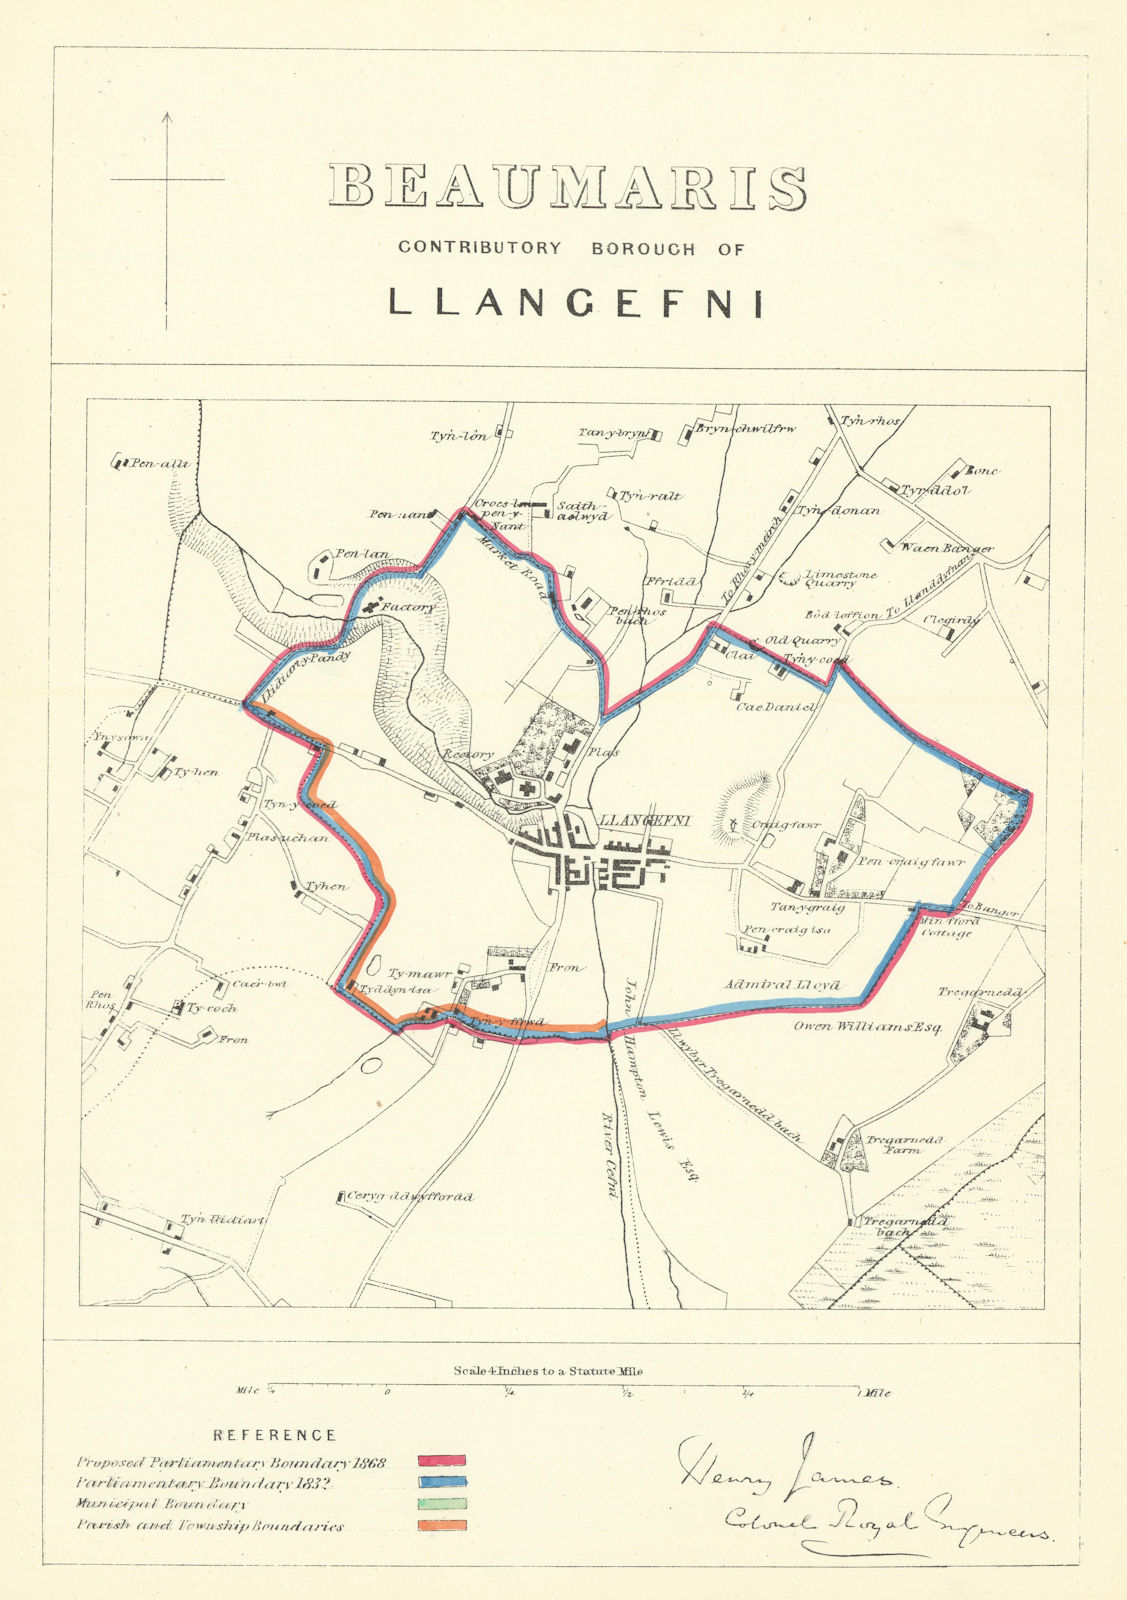 Associate Product Beaumaris Contributory Borough of Llangefni. JAMES. Boundary Commission 1868 map